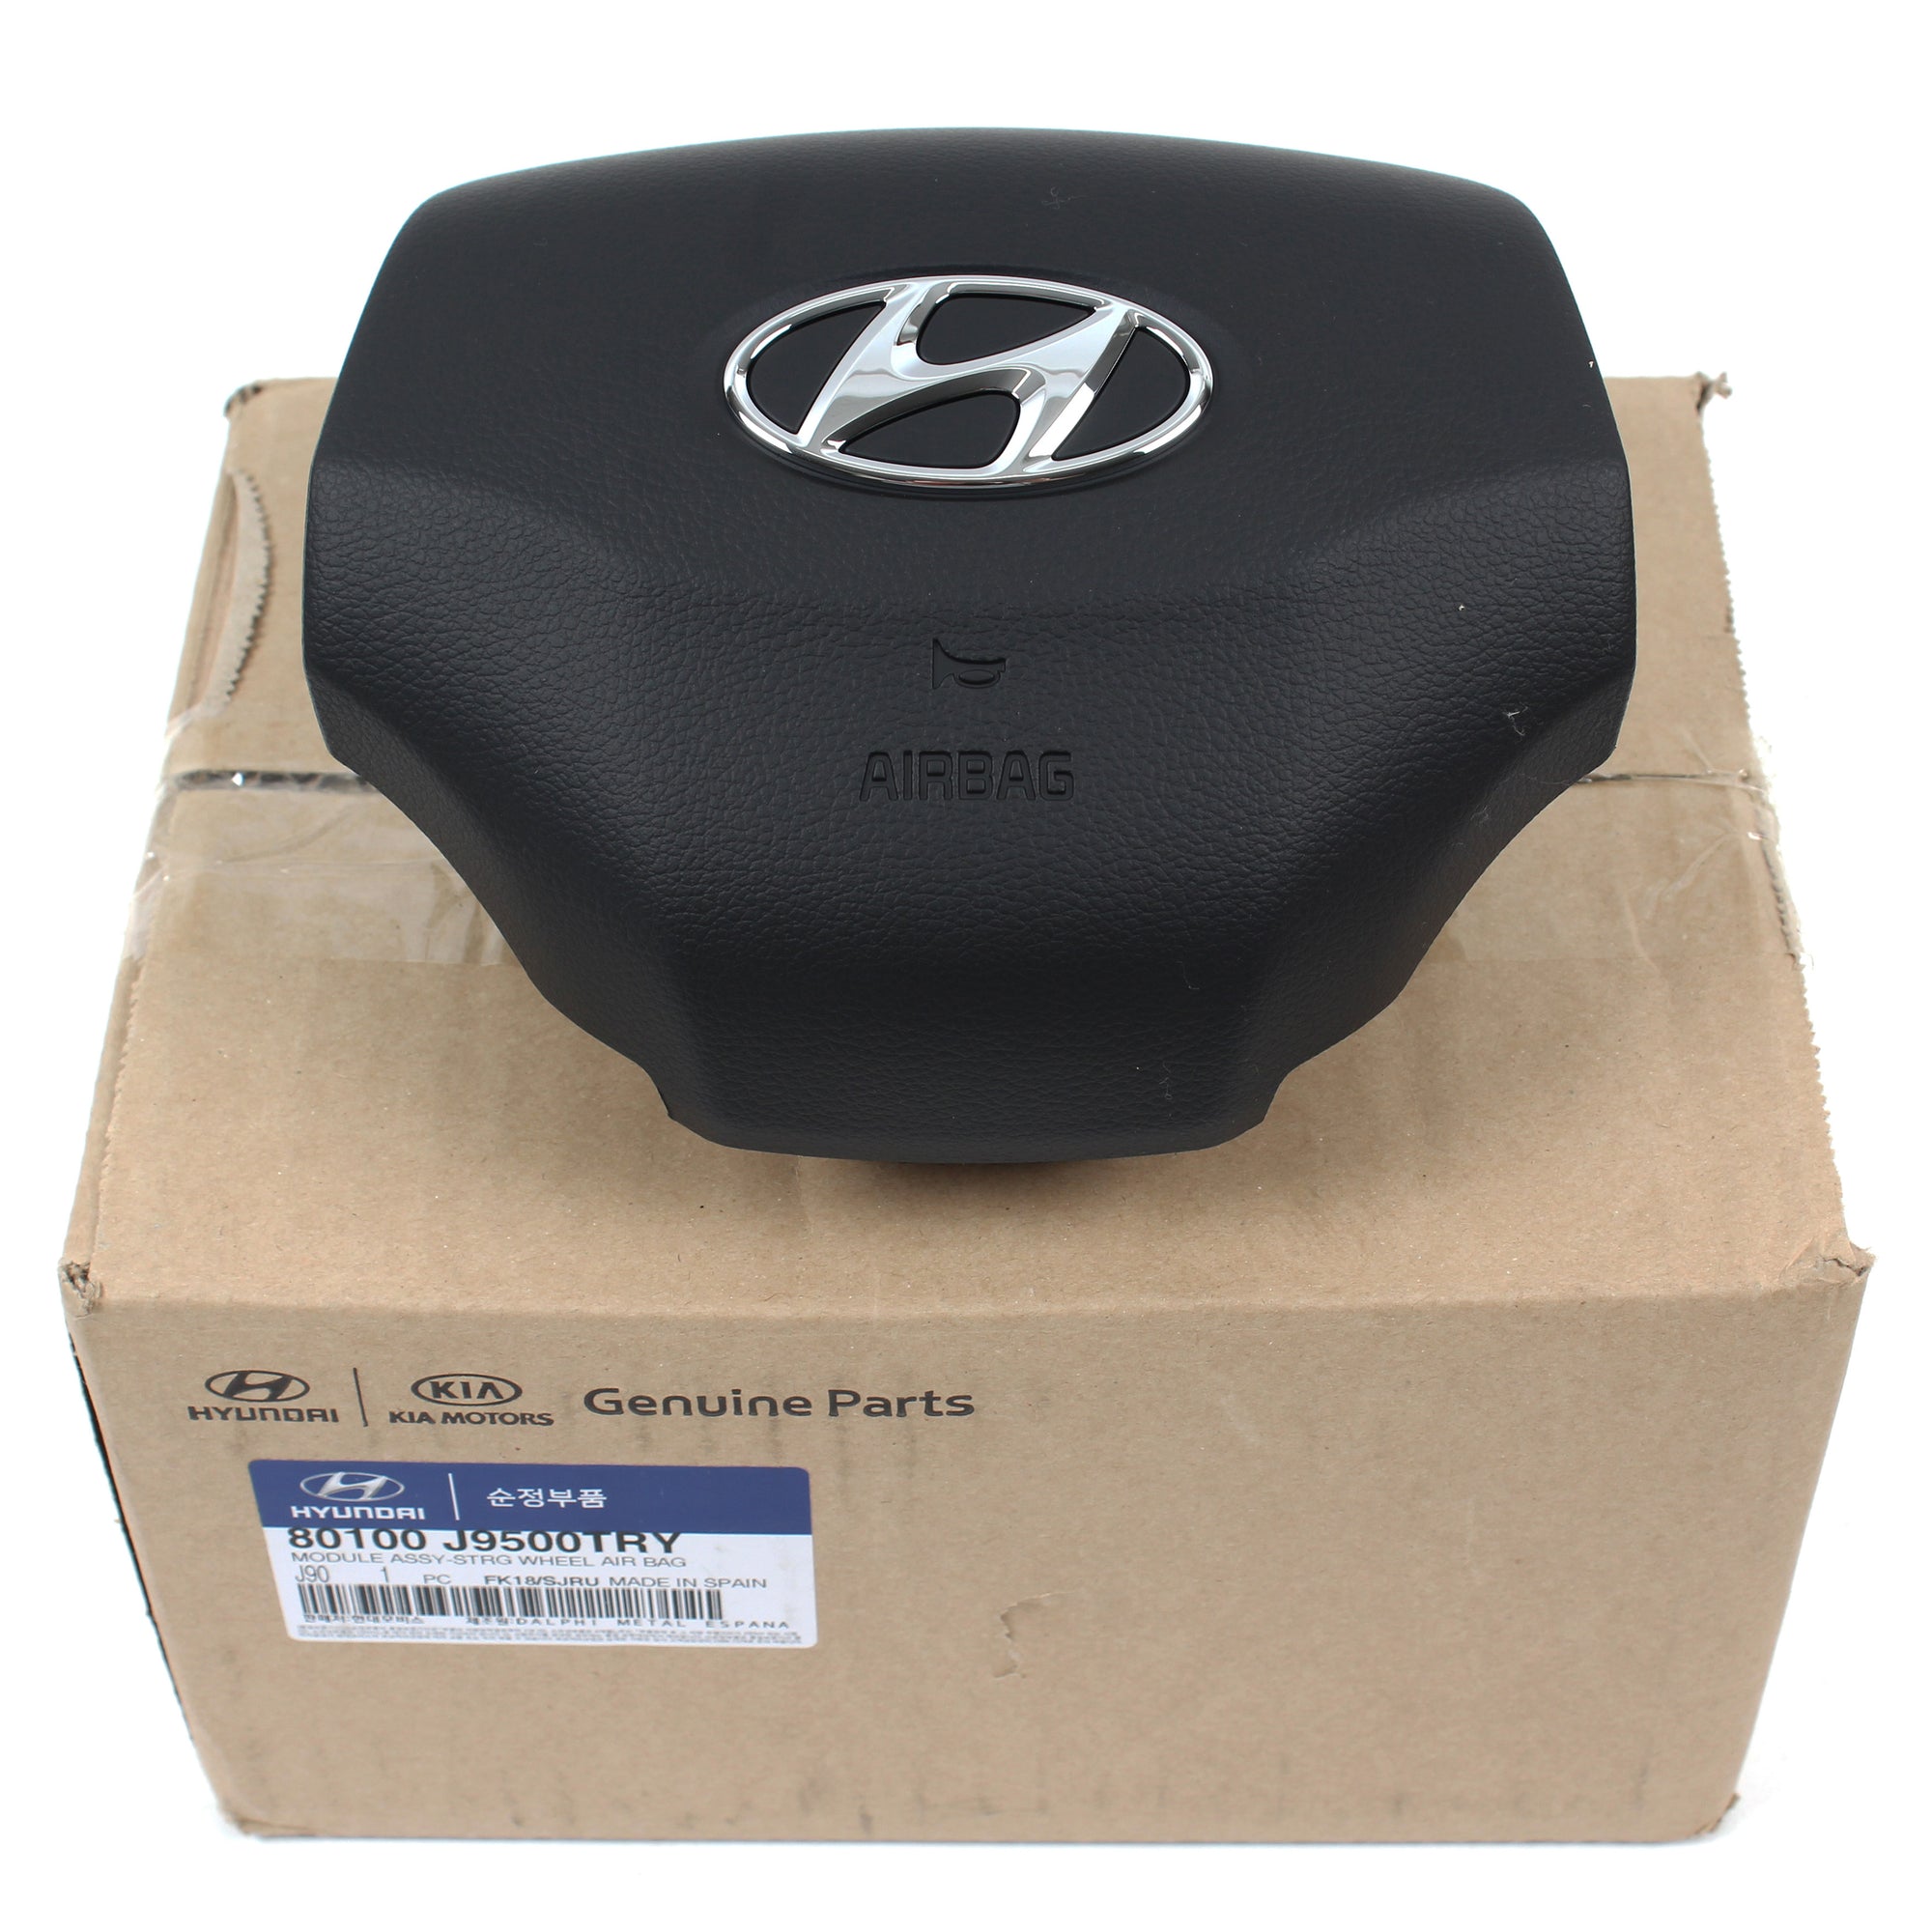 GENUINE Steering Wheel Airbag for 2018-2021 Hyundai Kona 80100J9500TRY